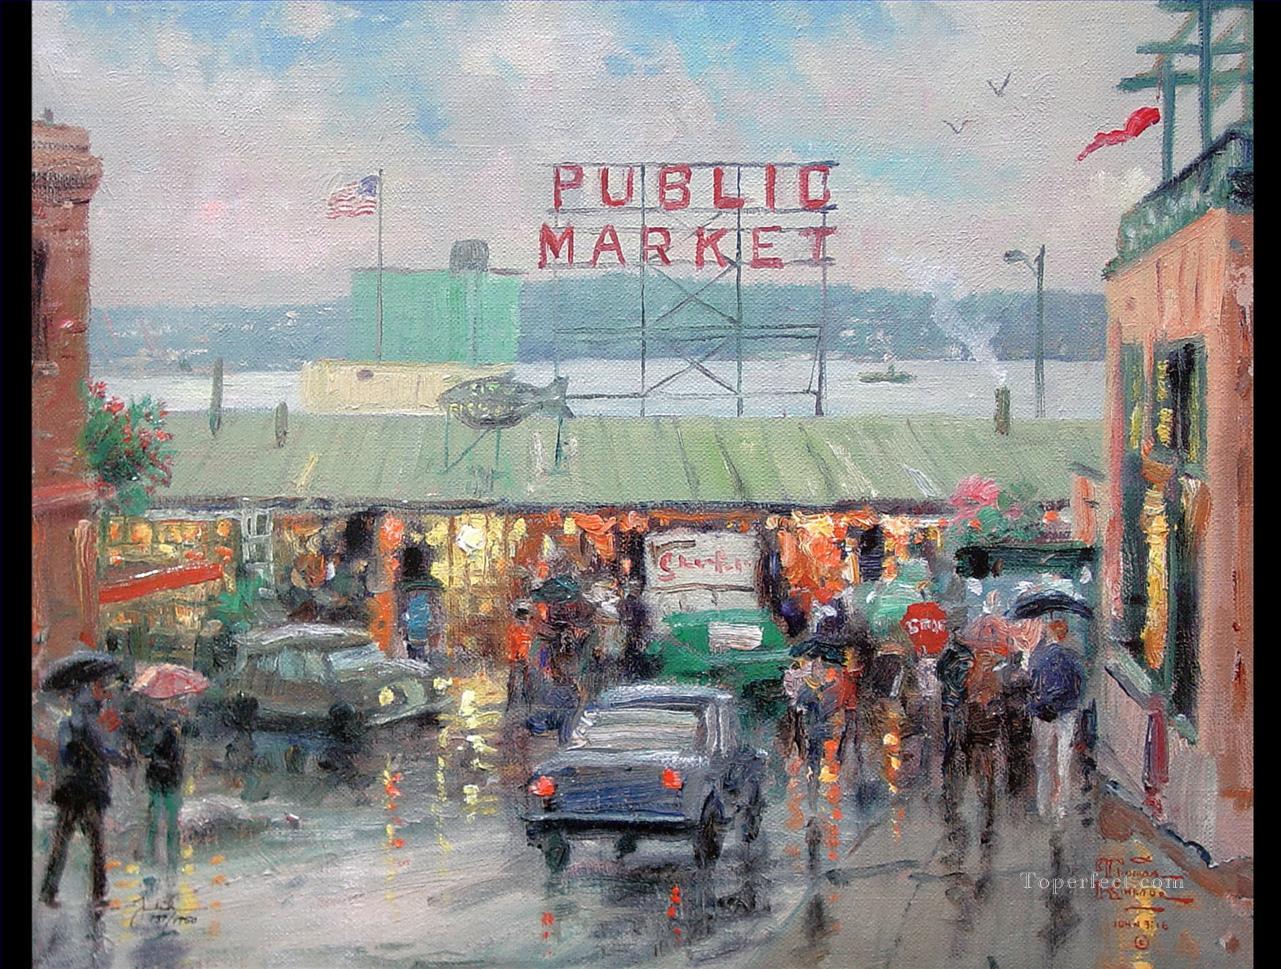 Paisaje urbano del mercado de Pike Place TK Pintura al óleo